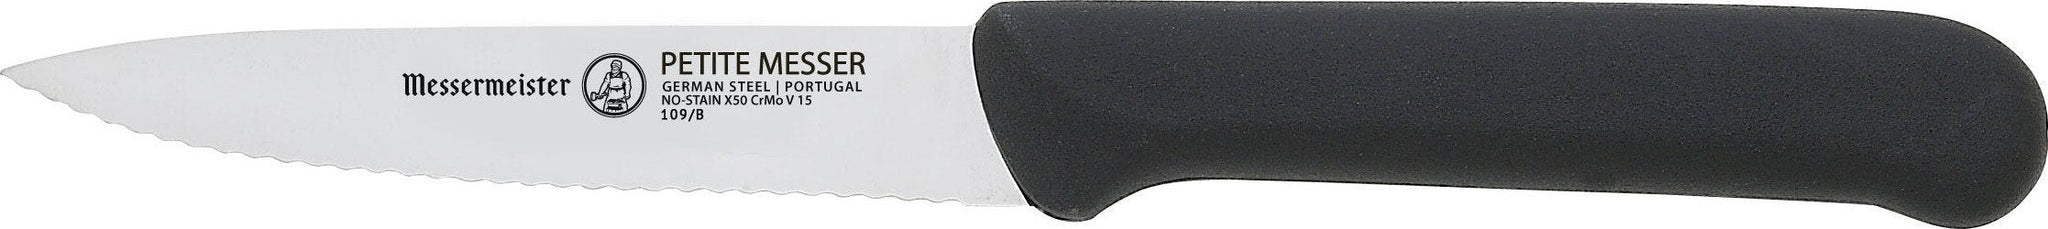 Messermeister - Black Petite Messer 4" Serrated Spear Point Parer with Matching Sheath - 109/B